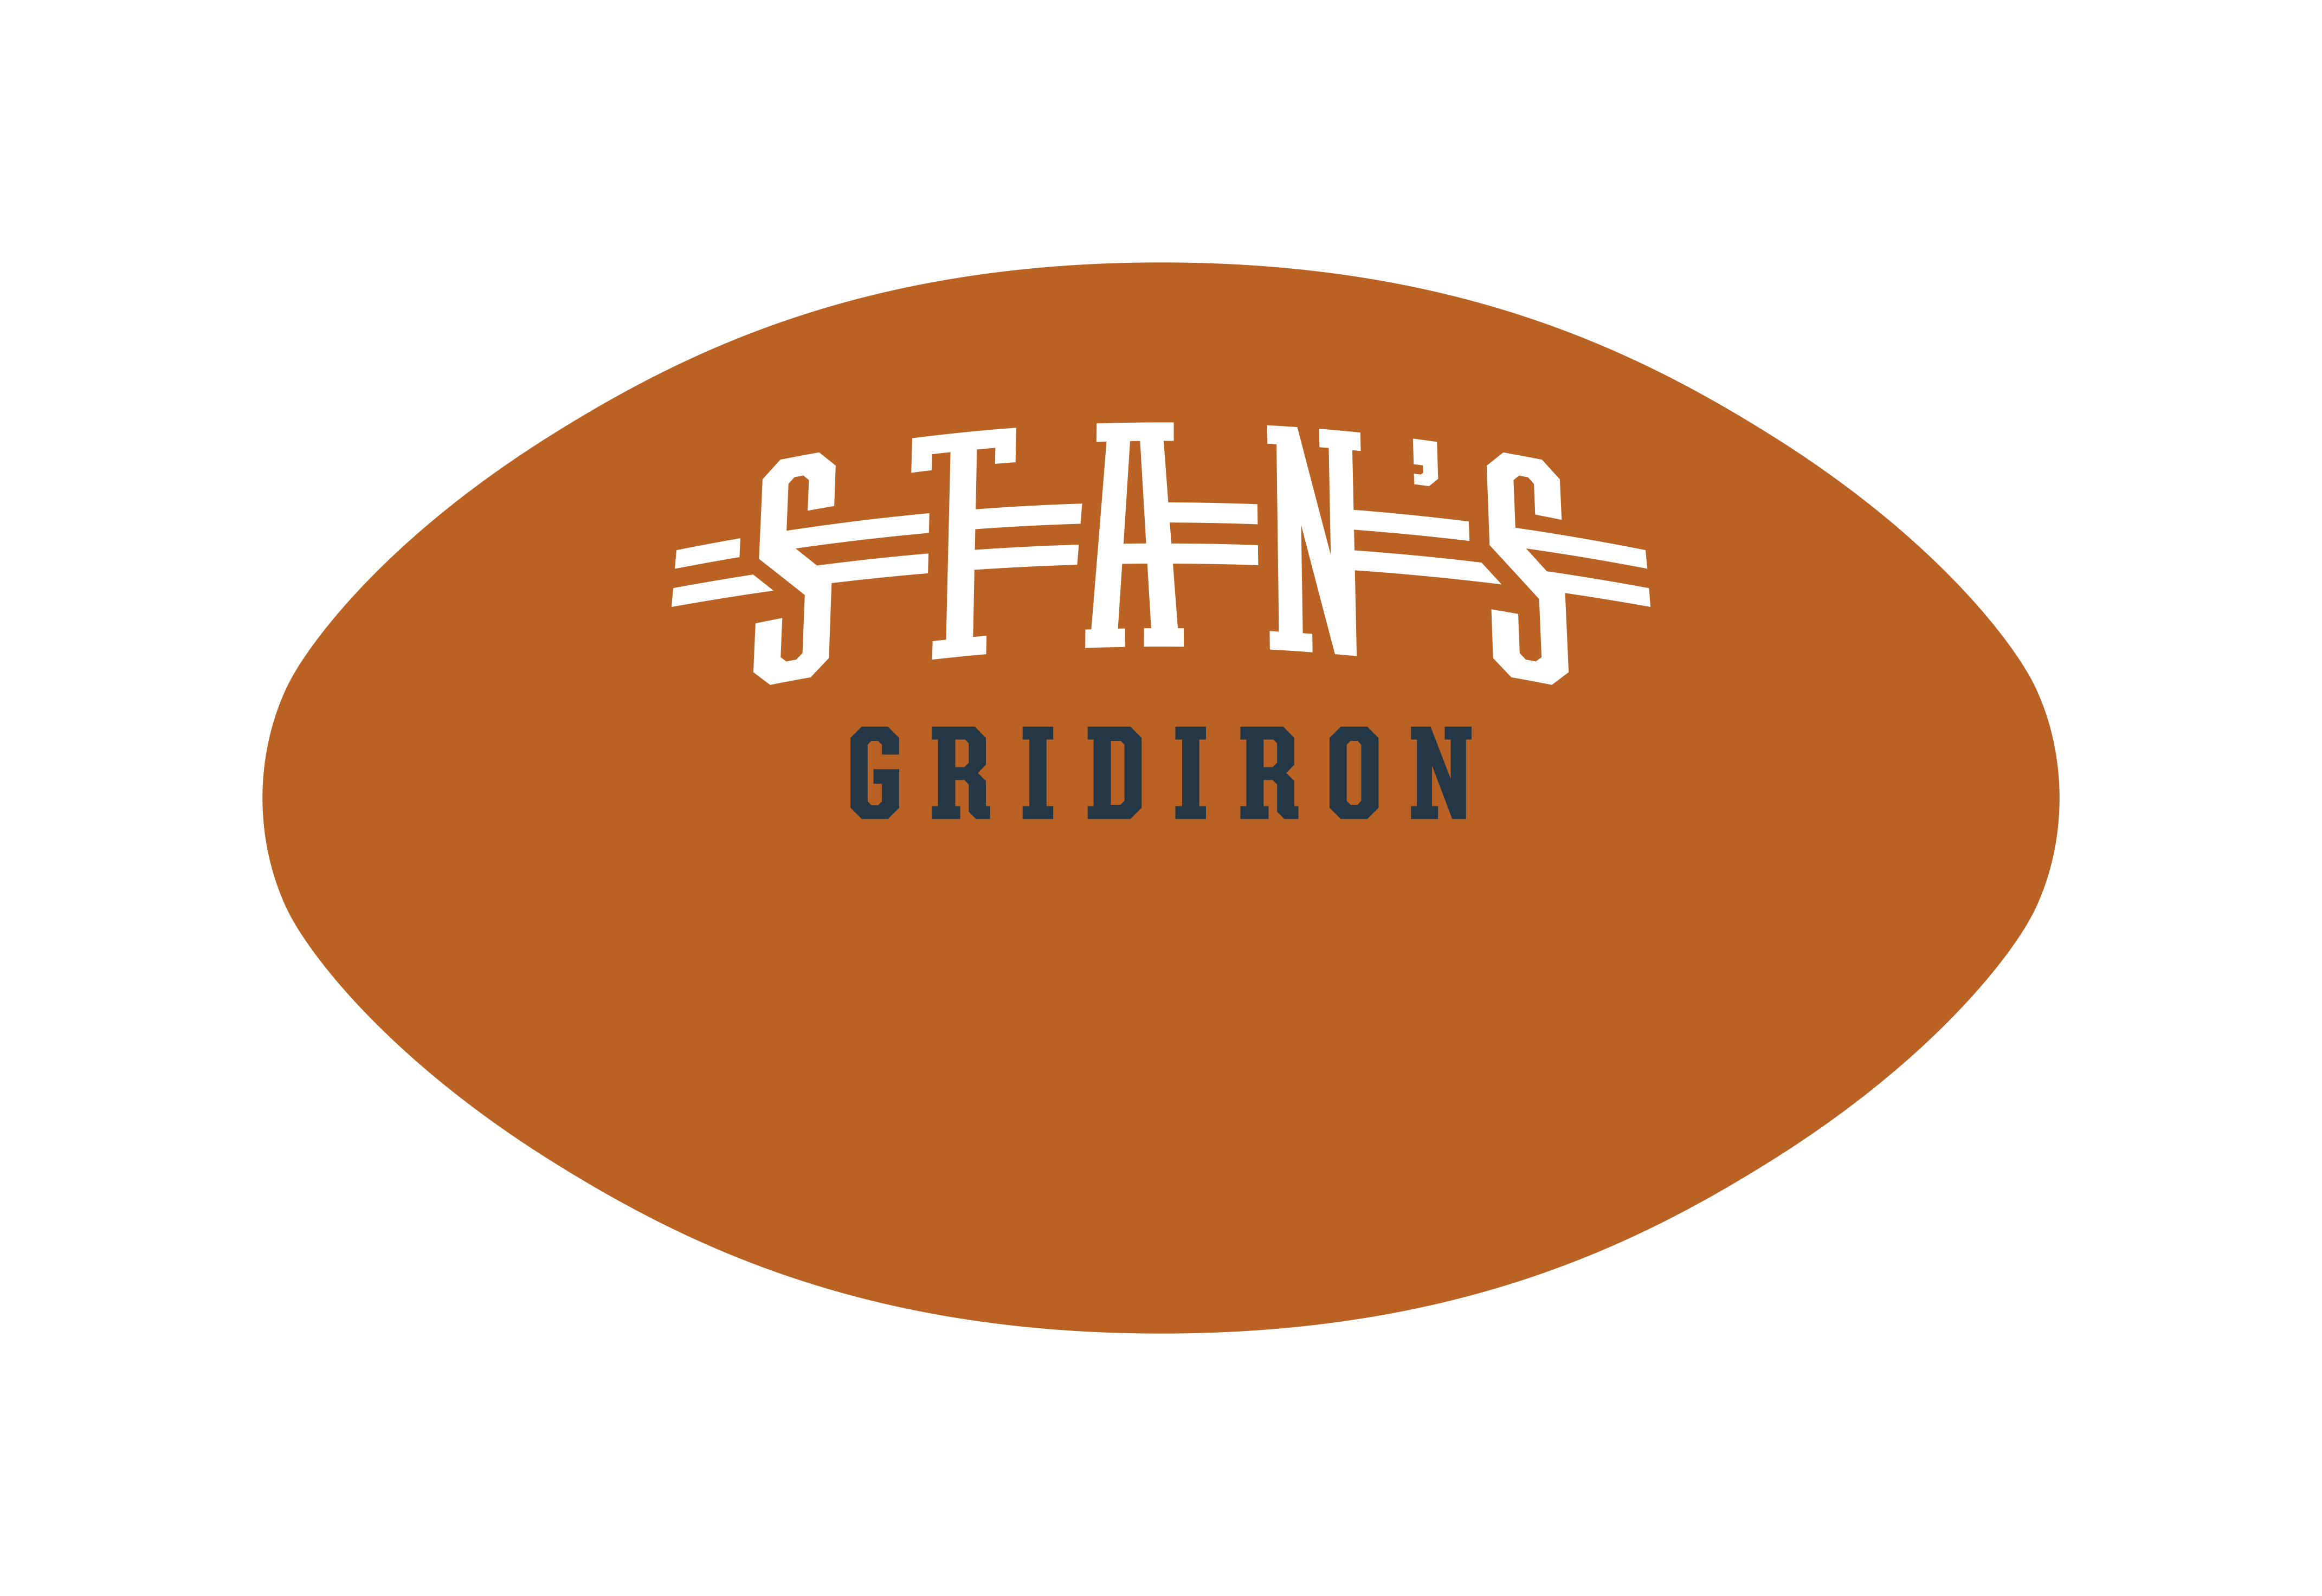 Stan's Gridiron - Branding